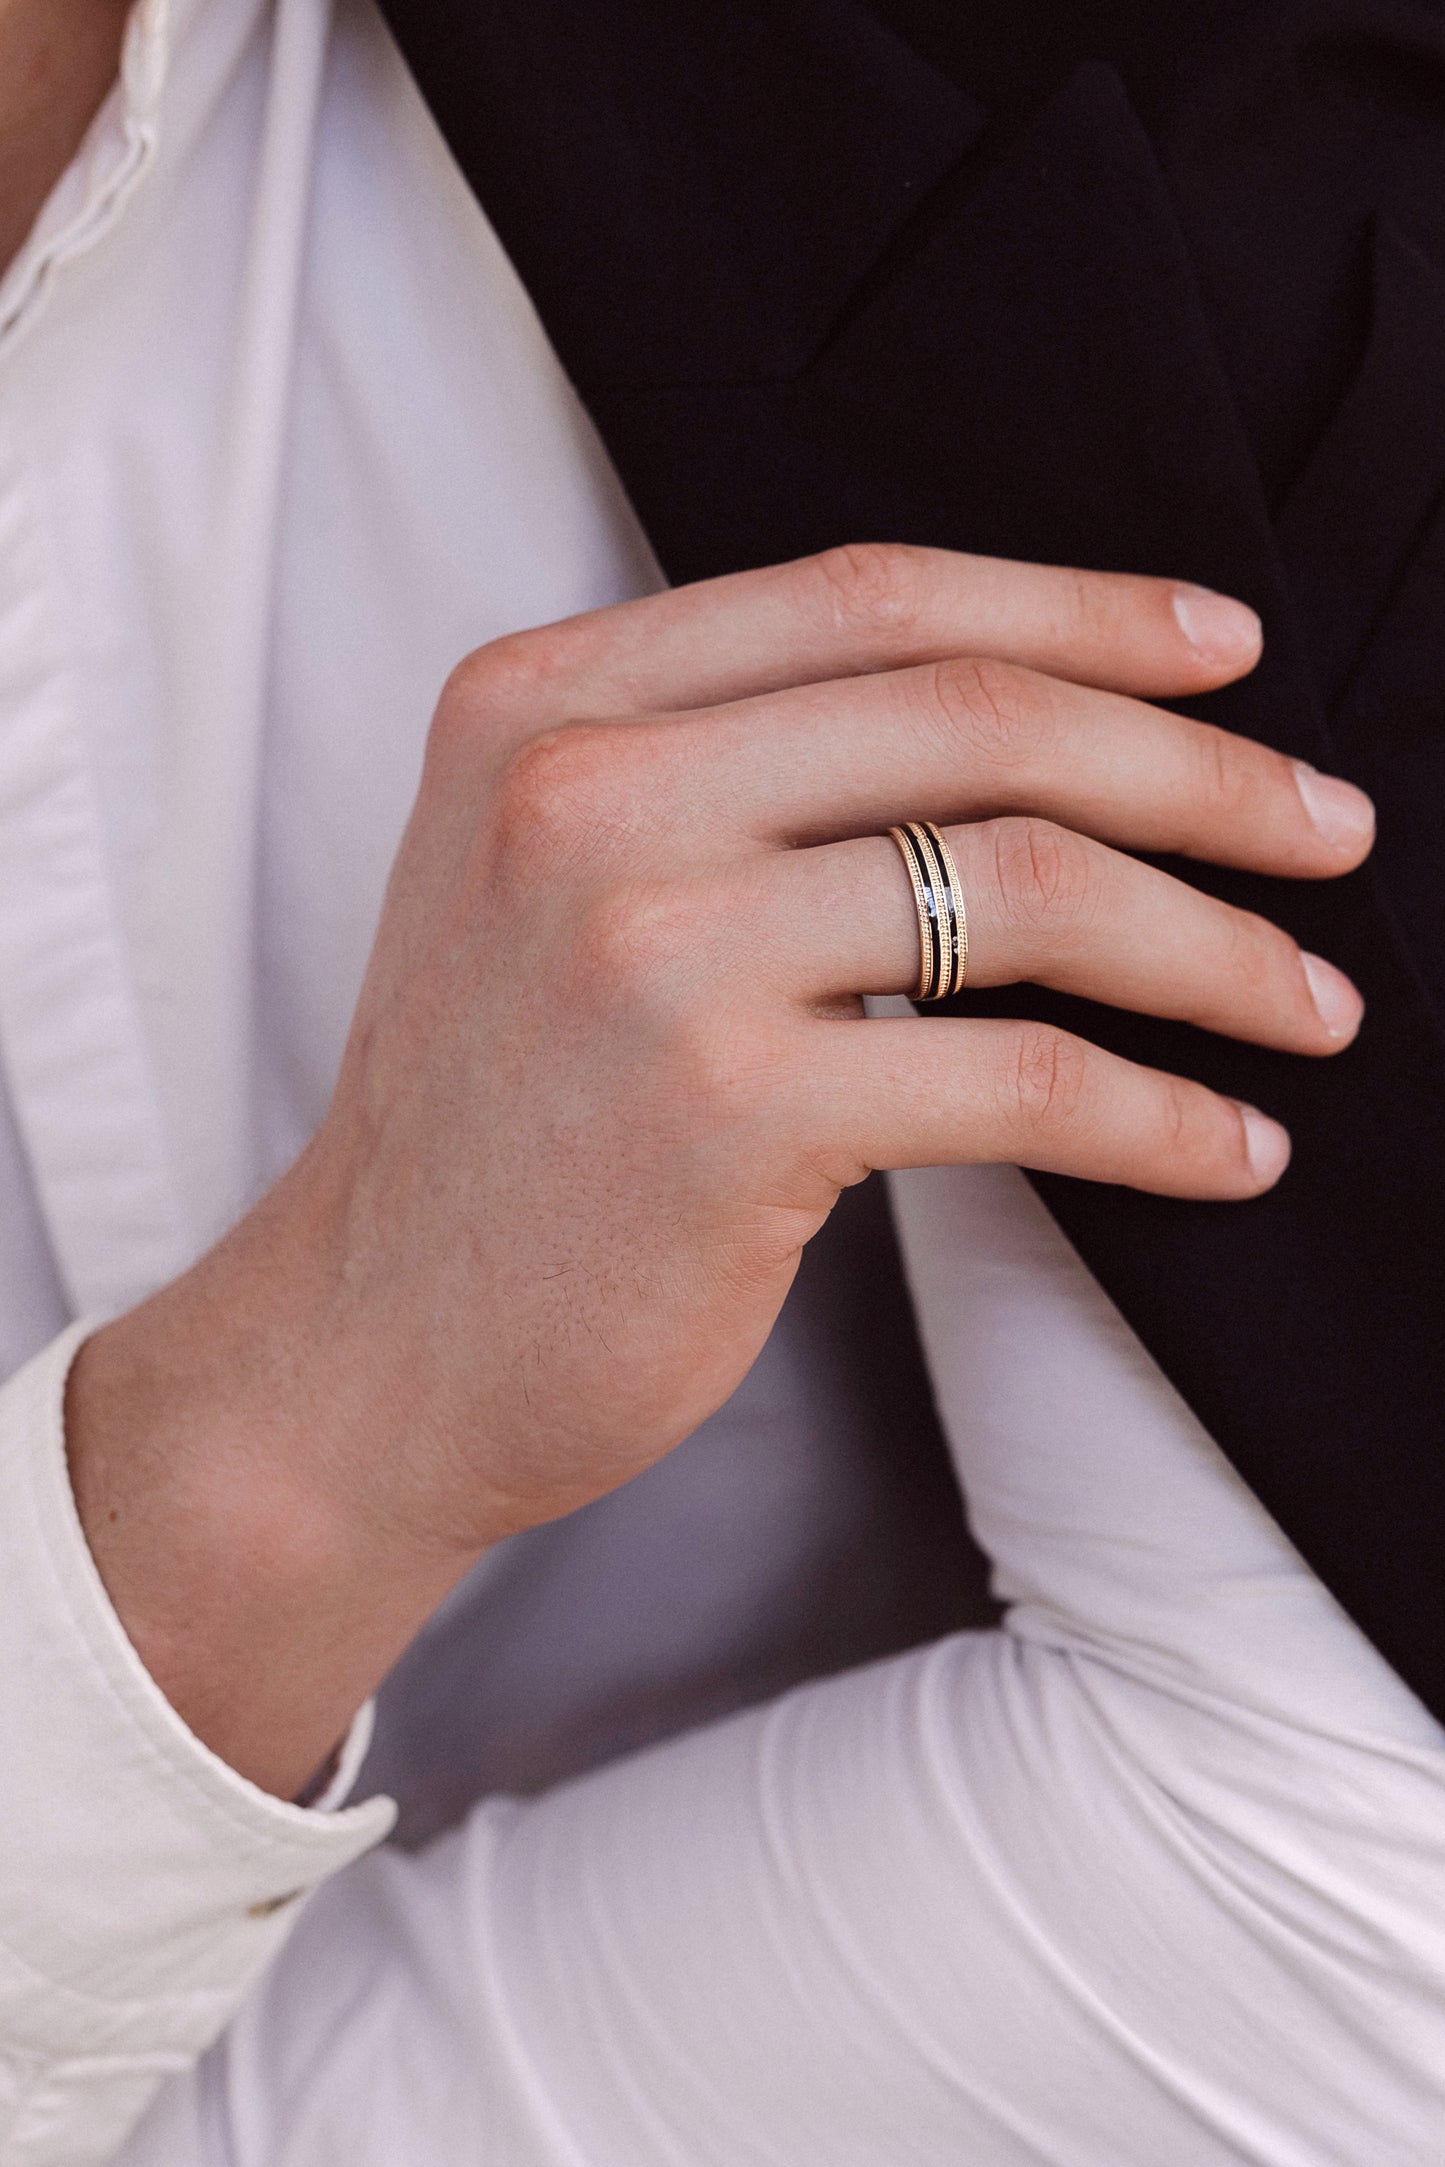 Unique gold wedding bands with white and black enamel. Couple wedding rings. Matching wedding bands. His and hers wedding rings set. Unique gold rings set.